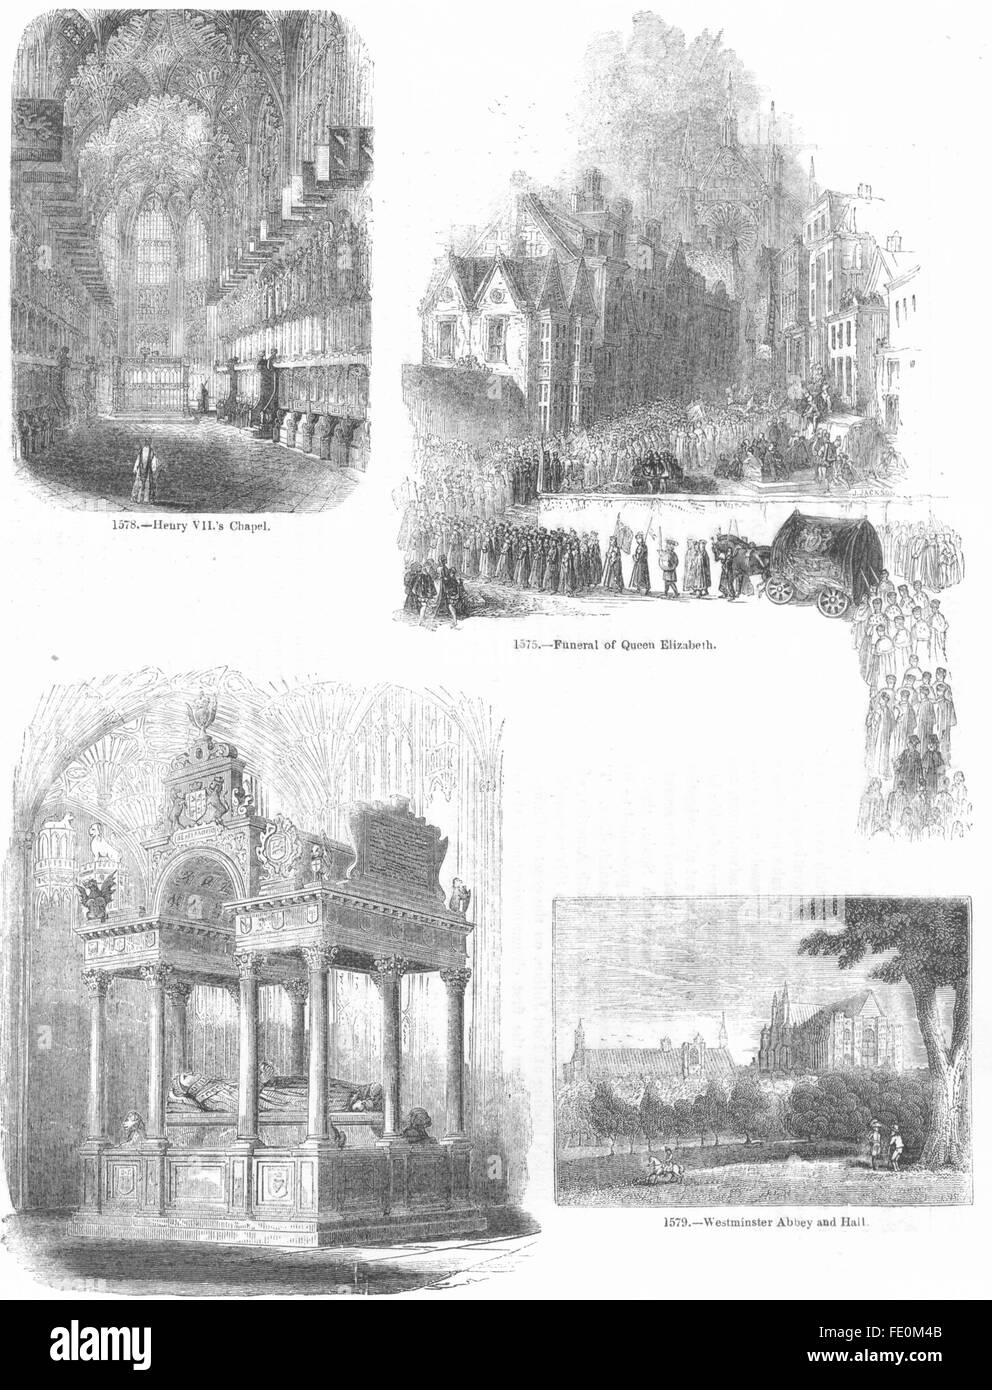 ELIZABETH I: Tomb, Funeral; Henry VII Chapel, antique print 1845 Stock Photo